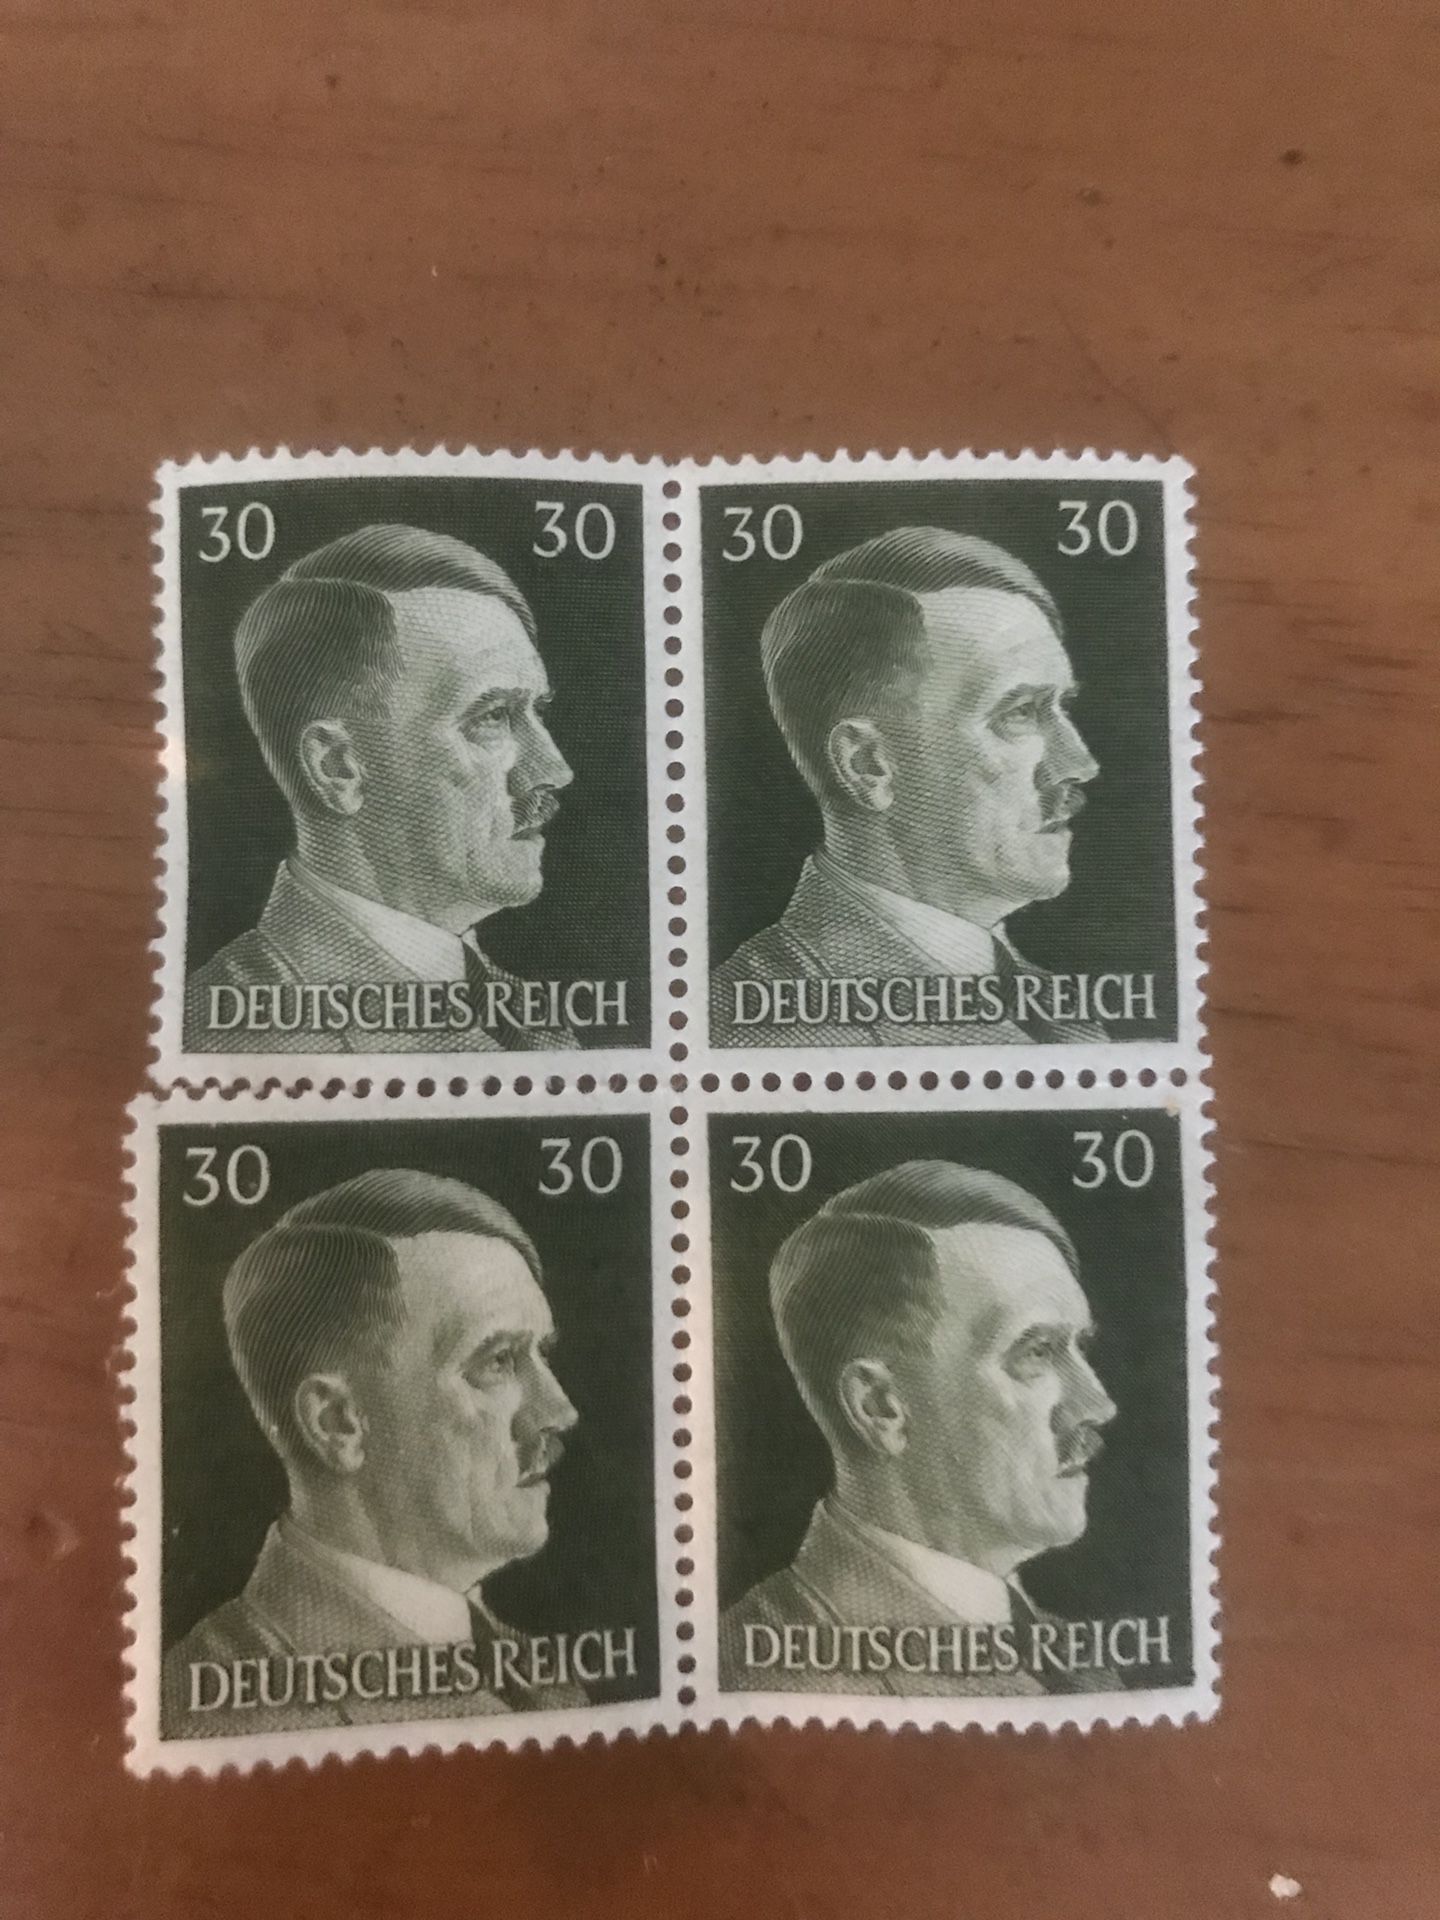 WW2 Postage Stamps very rare